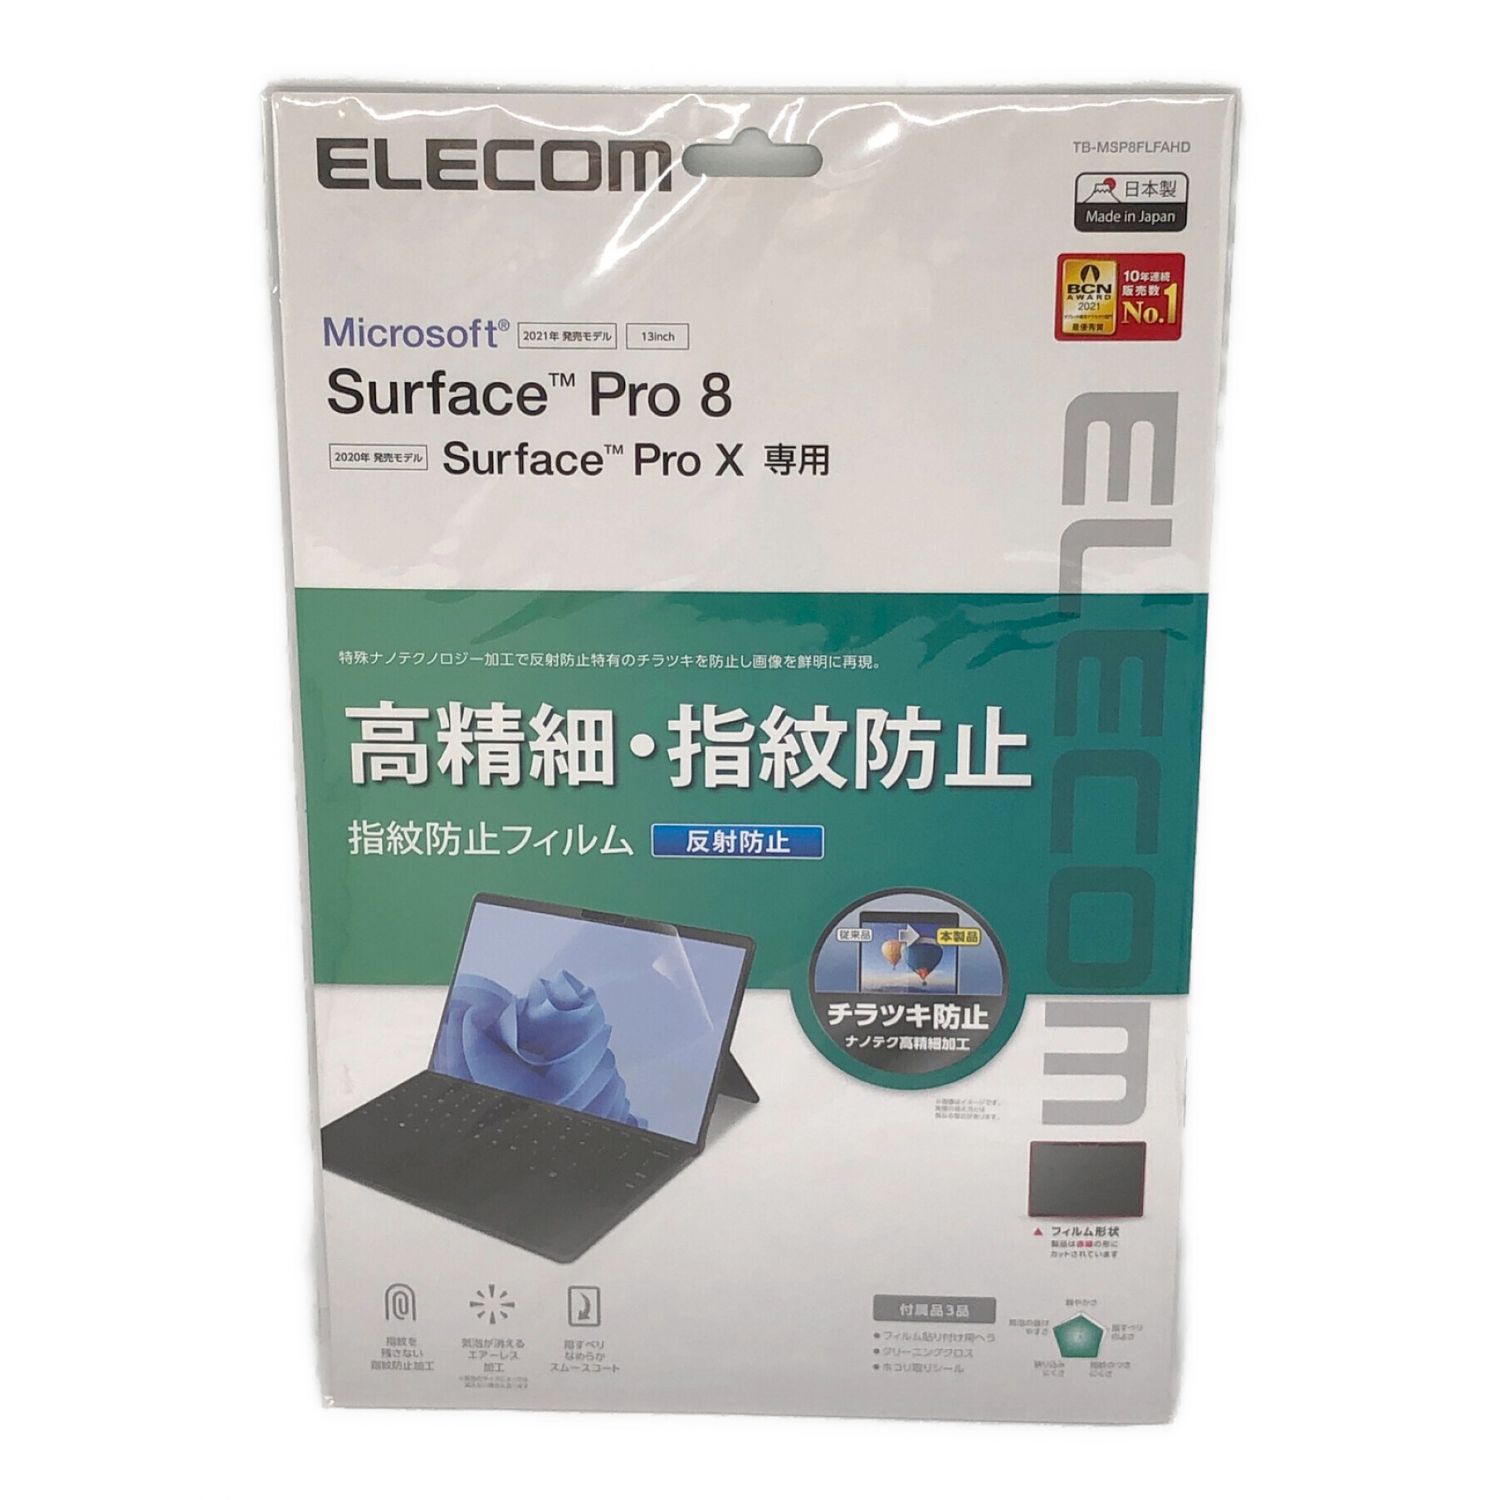 Surface Pro 8 i5/8/128 キーボード付 IUR-00006